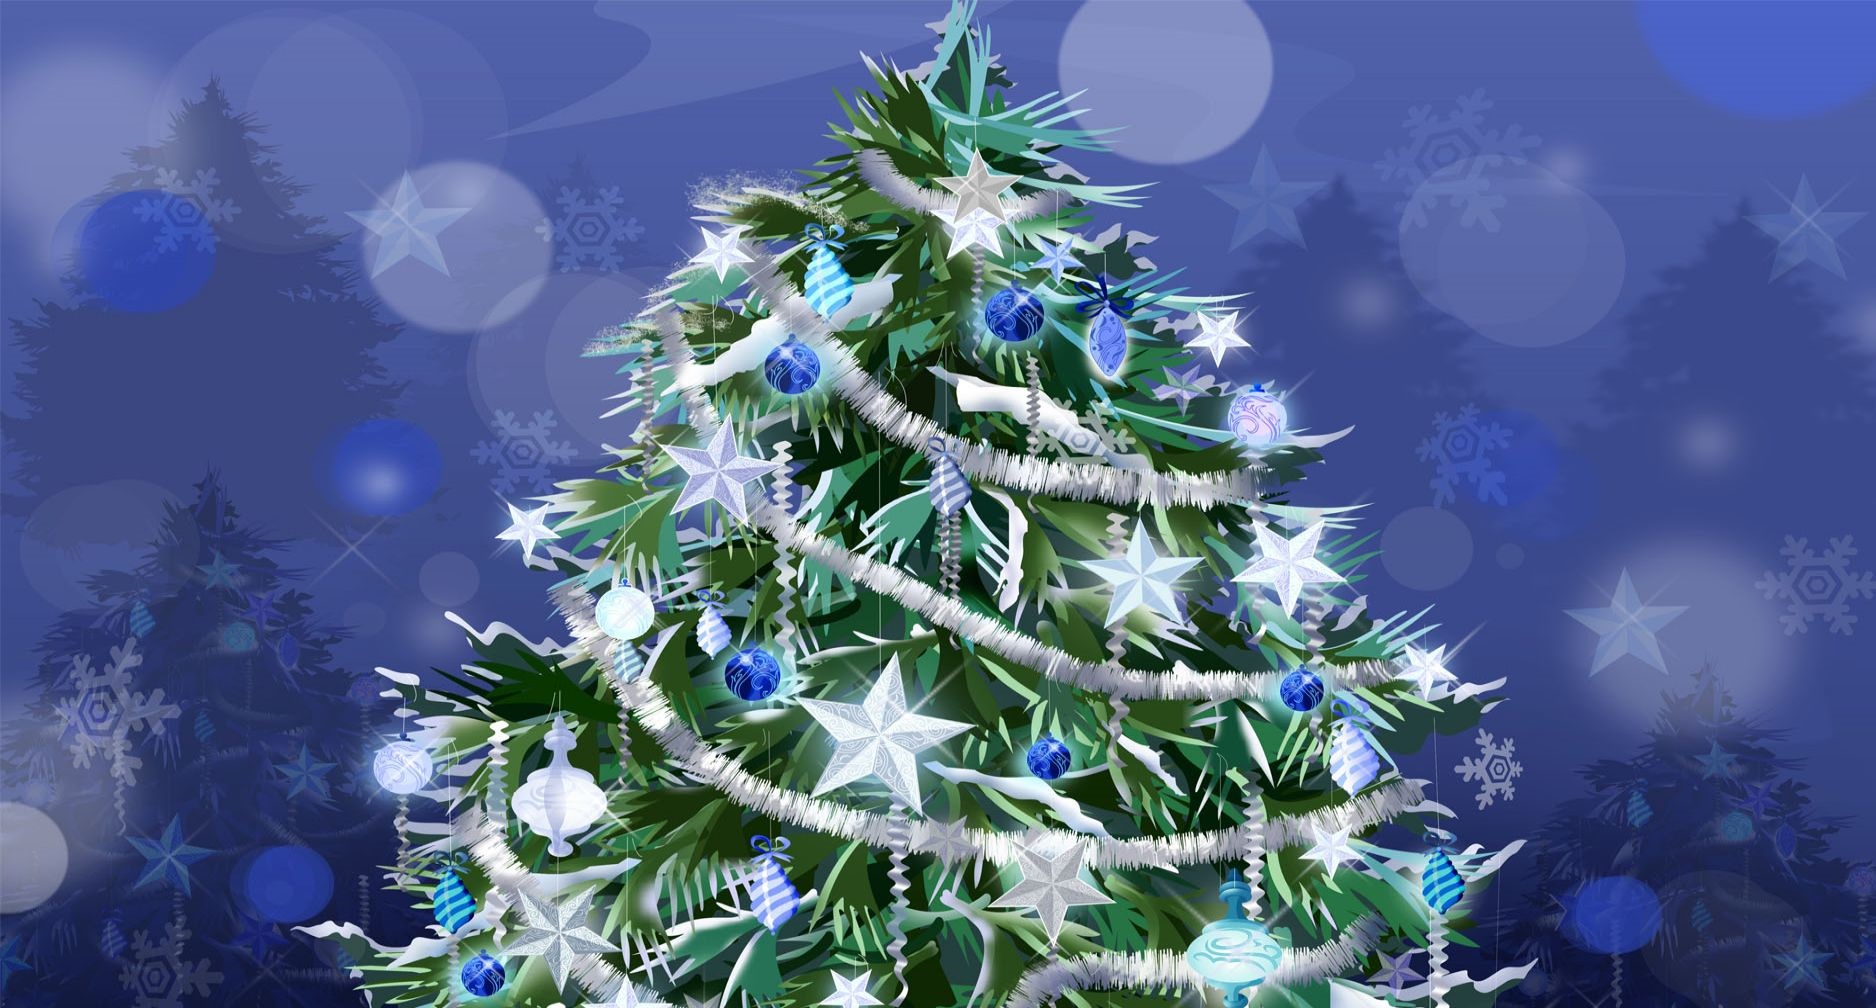 decorated christmas tree hd image 2016